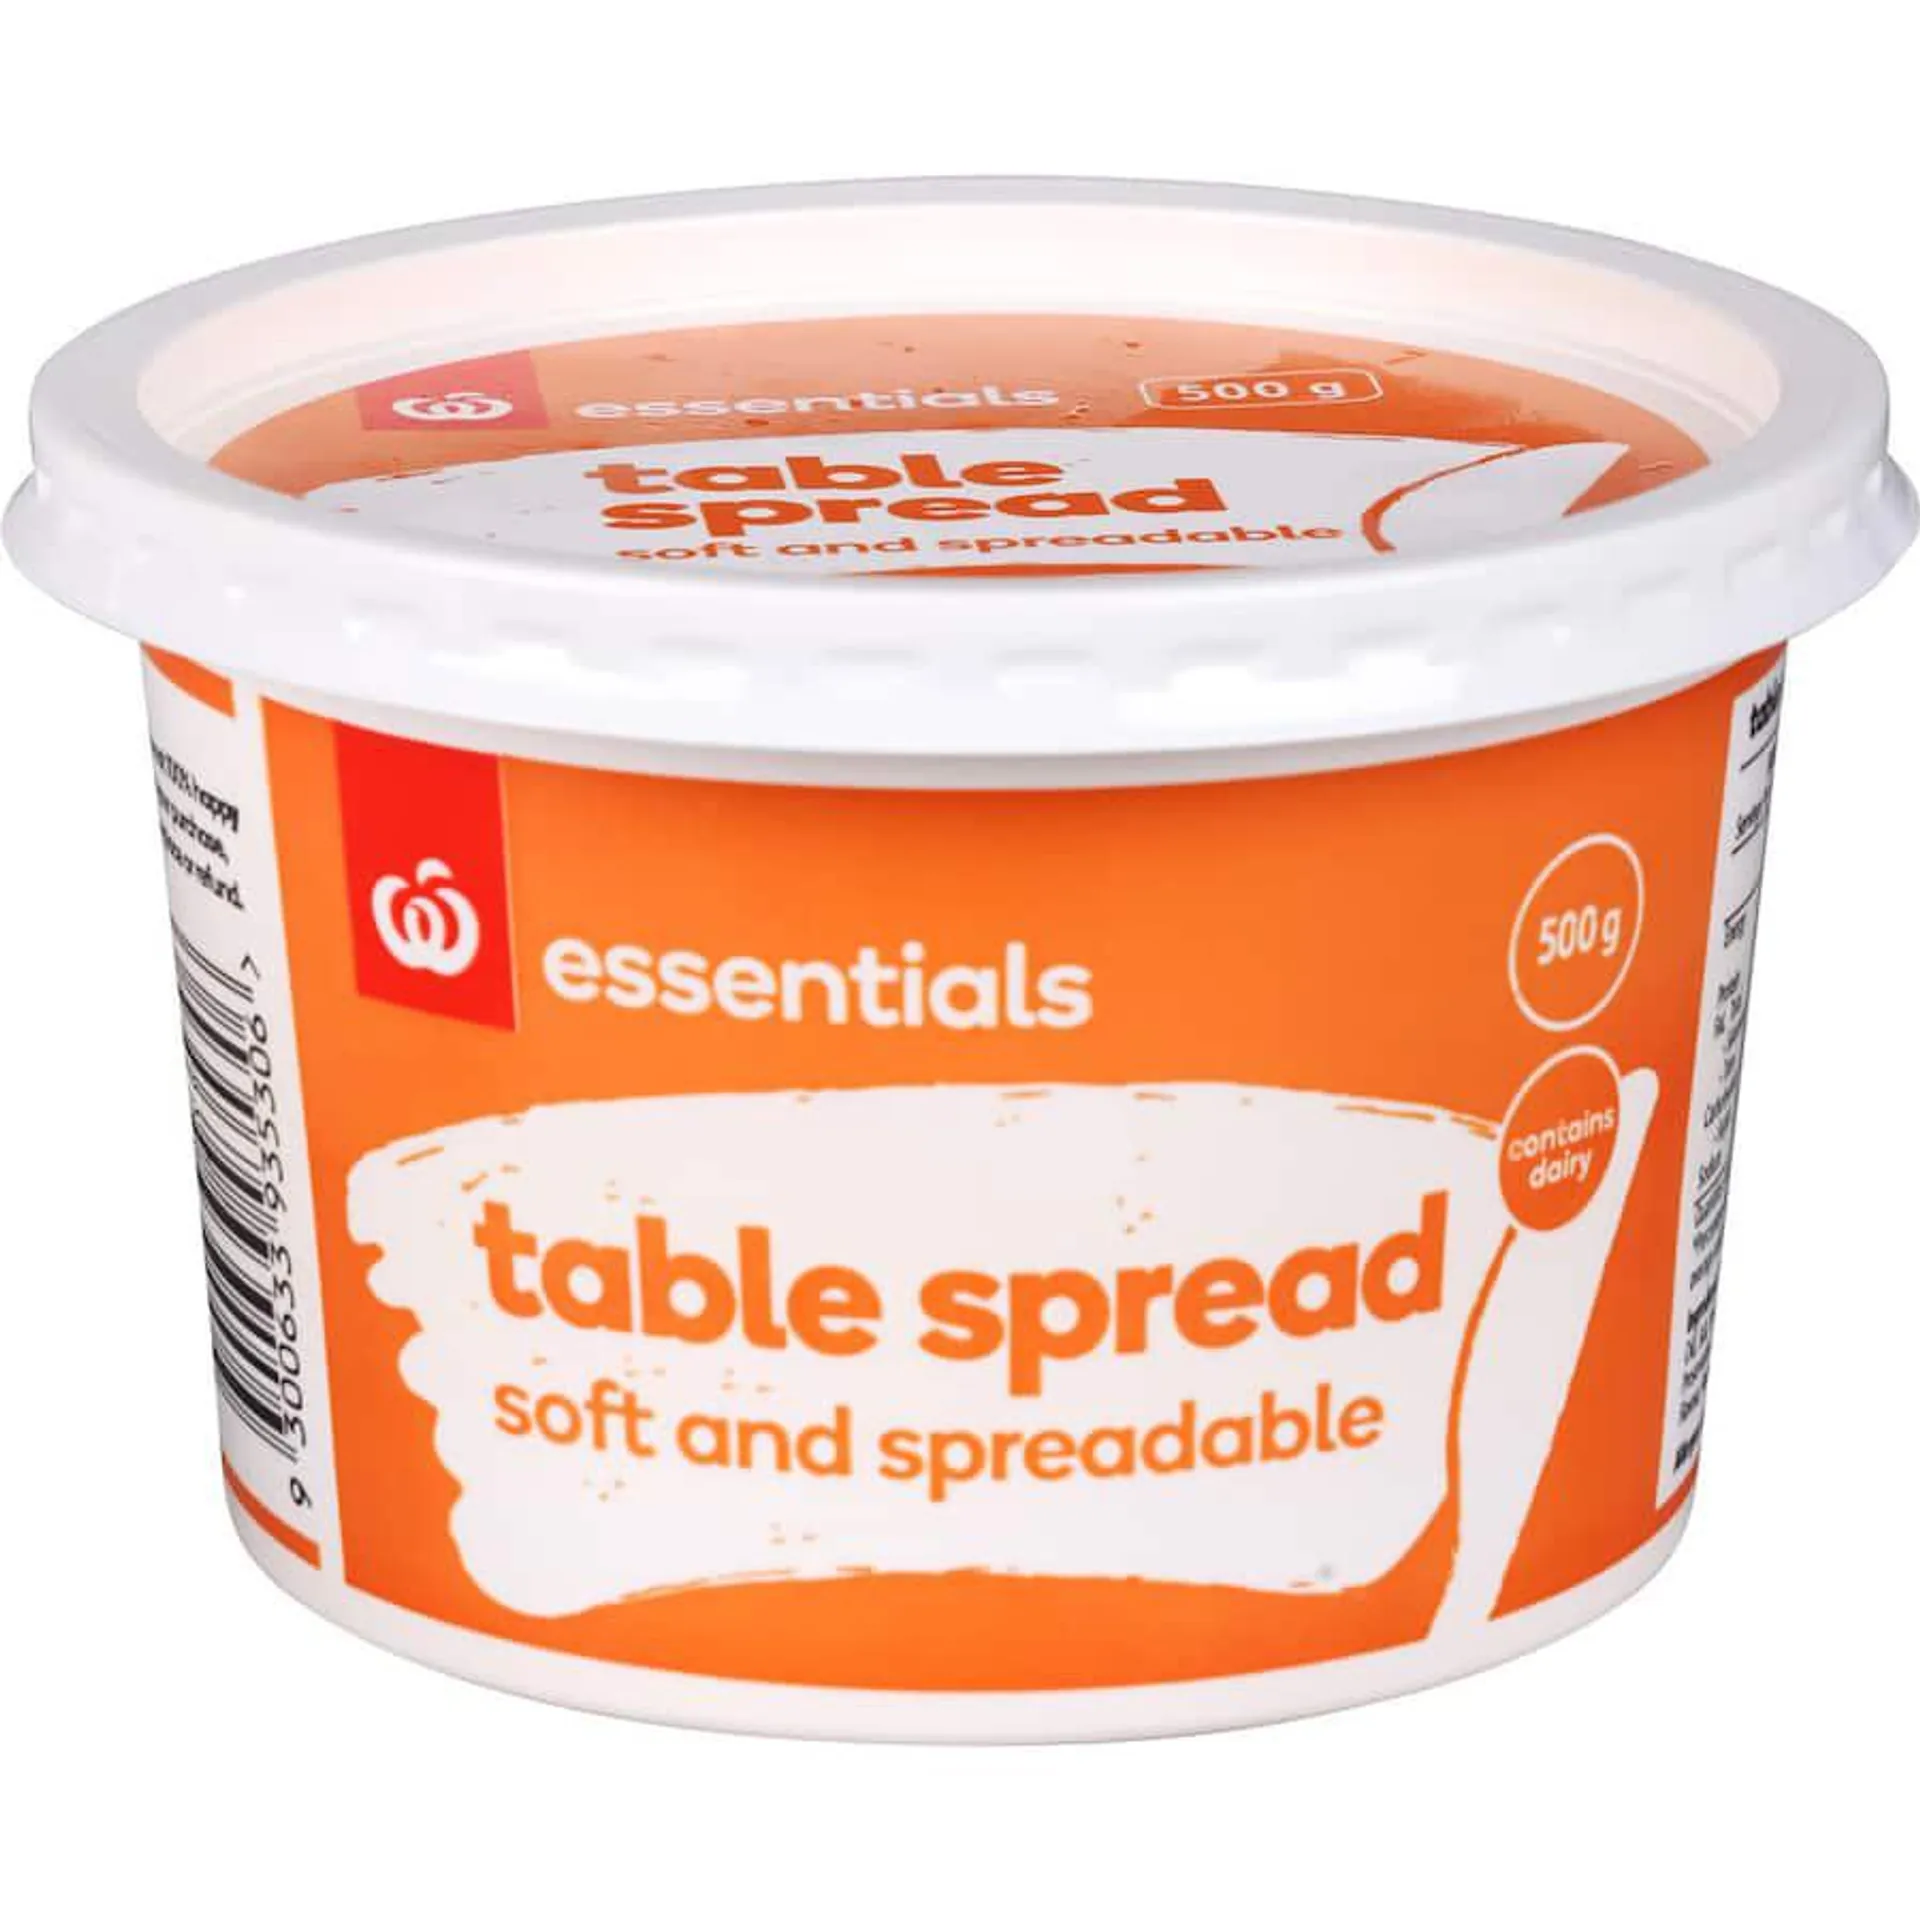 Essentials Table Spread Margarine